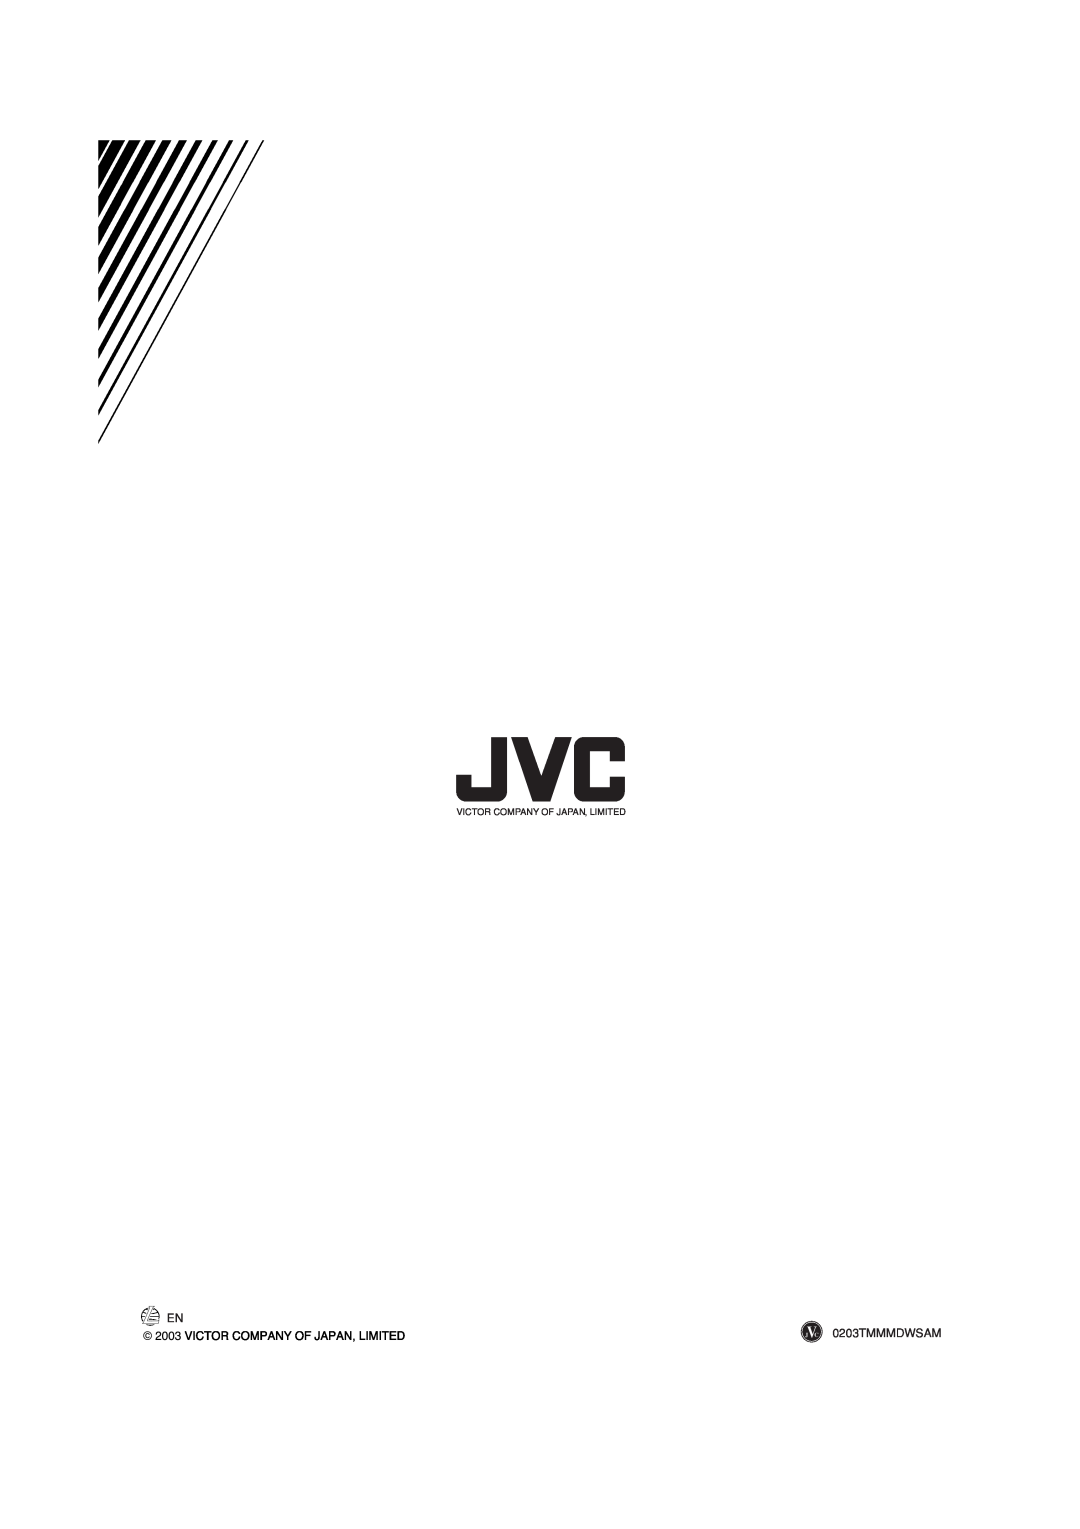 JVC CA-MXGT88, CA-MXGA77 manual EN JVC 0203TMMMDWSAM, Victor Company Of Japan, Limited 